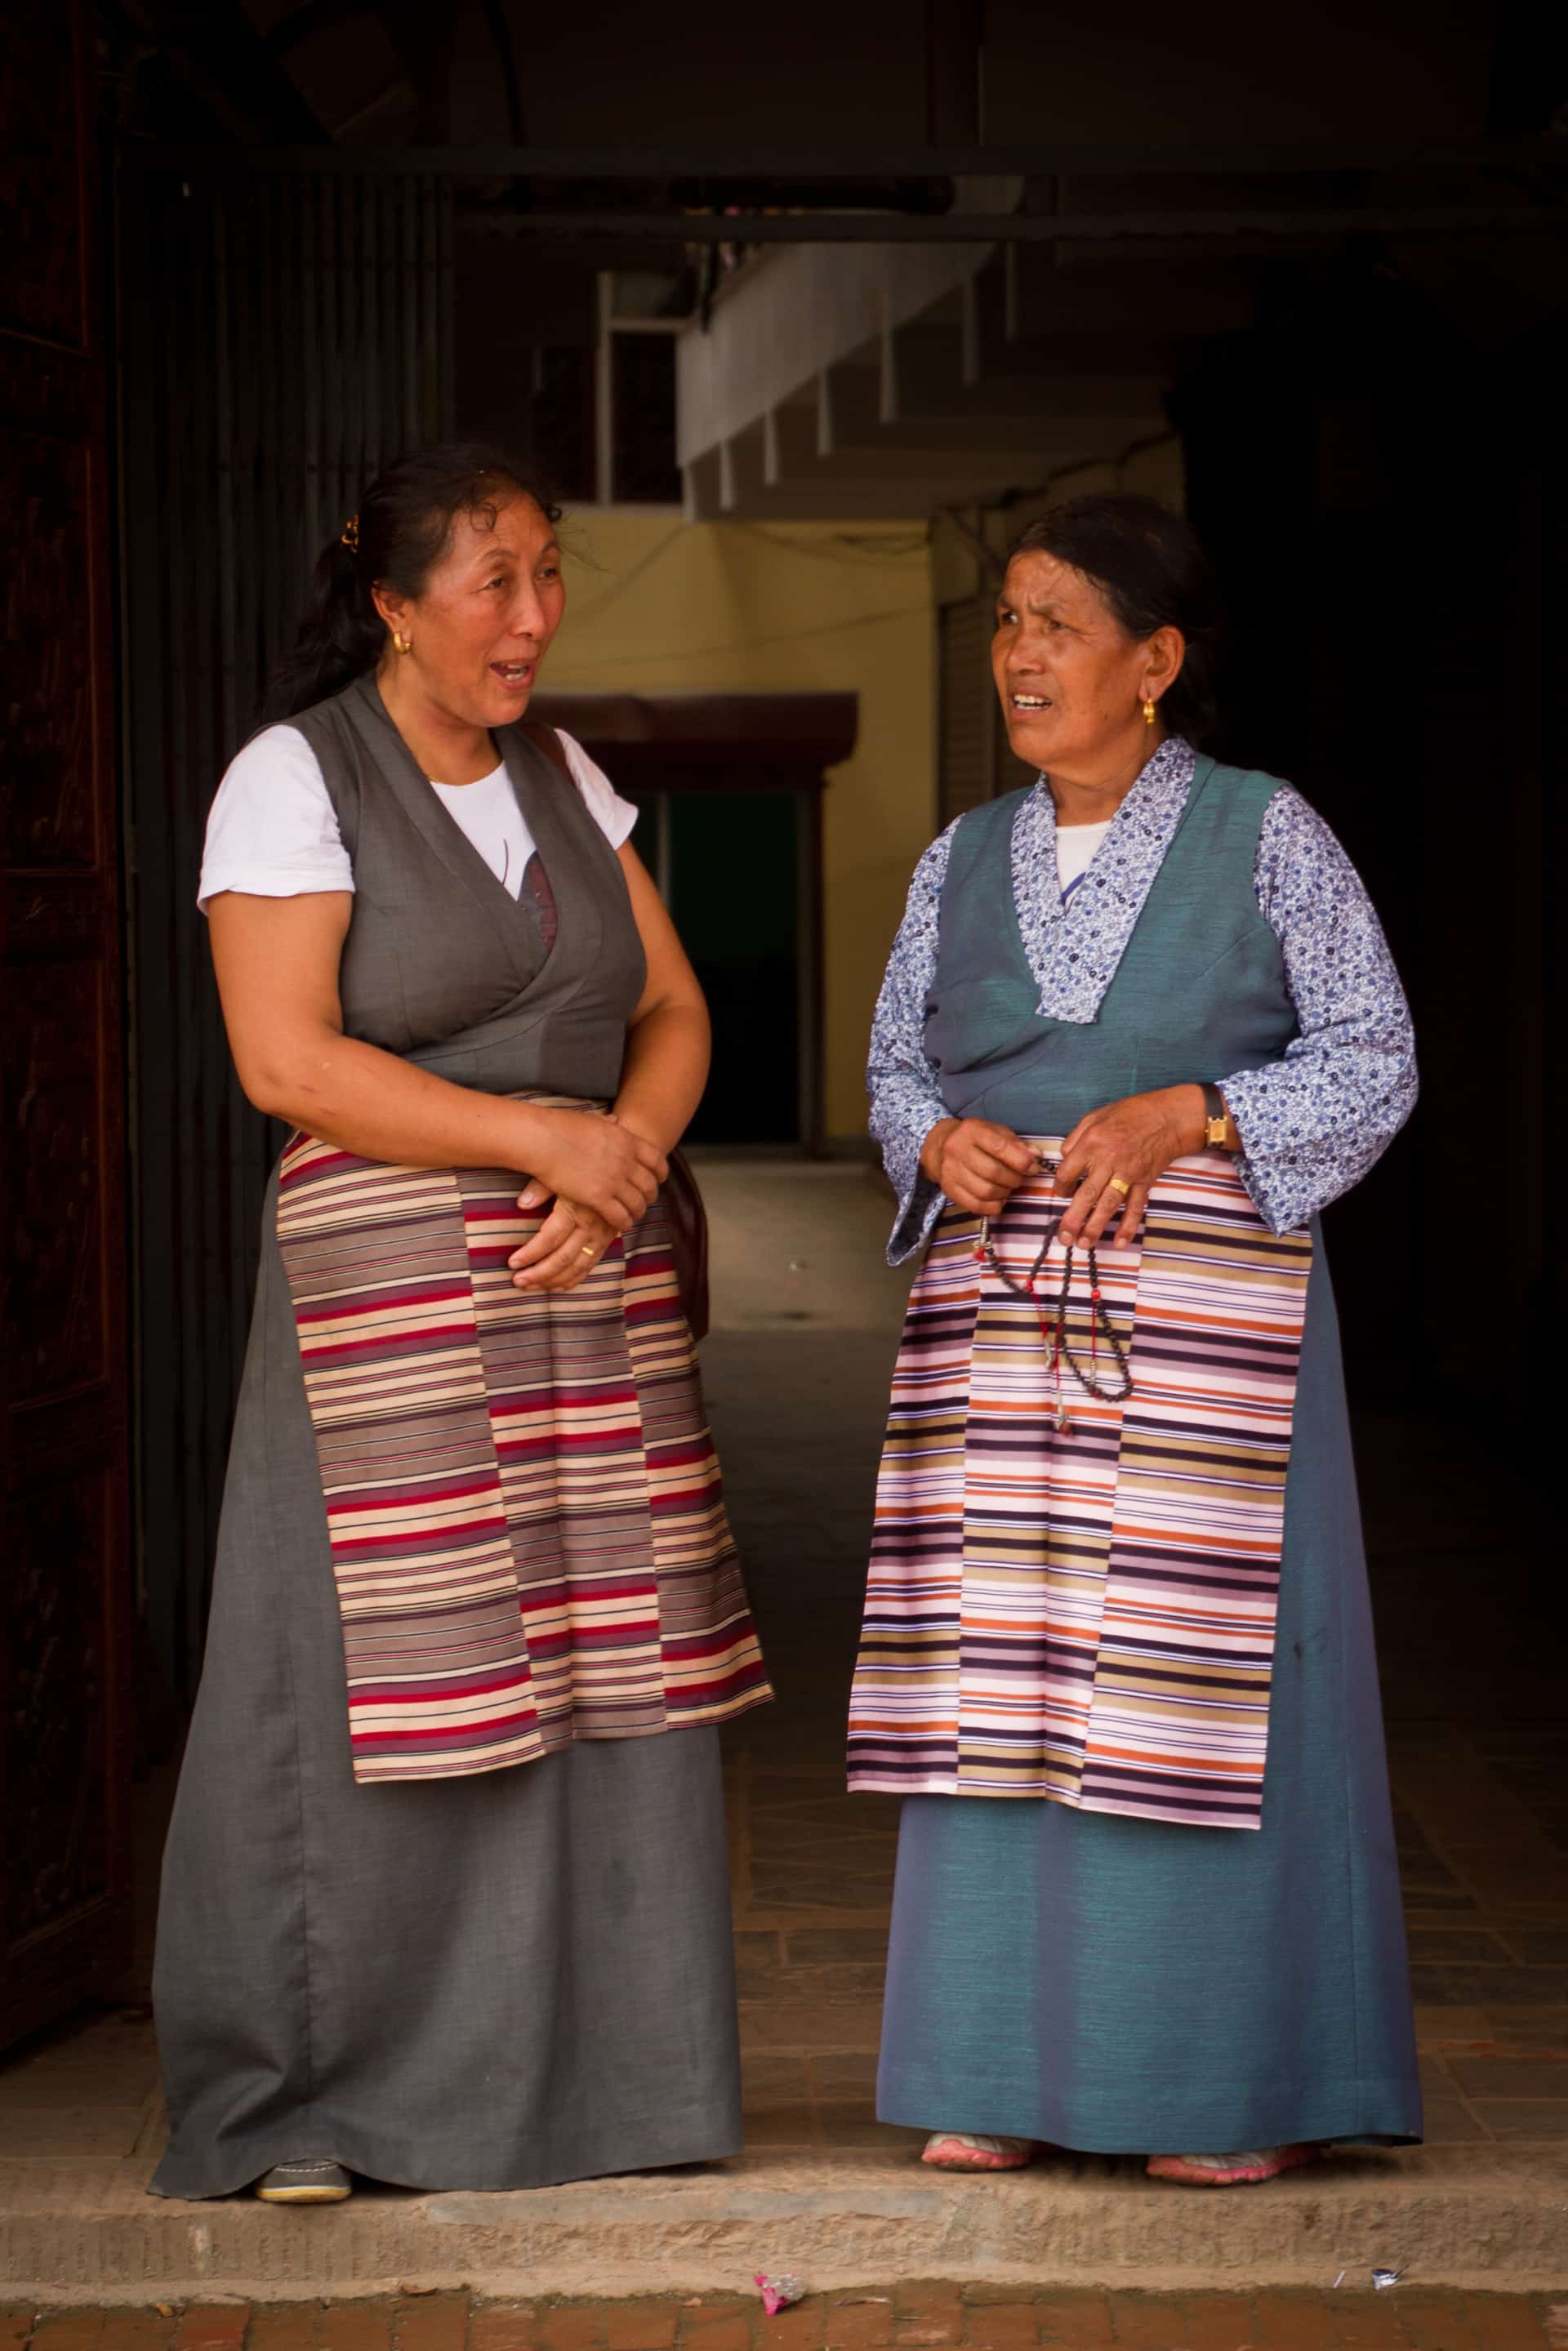 Two Tibetan Buddhist ladies in traditional dress talk together in Boudhanath Temple, Kathmandu, Nepal